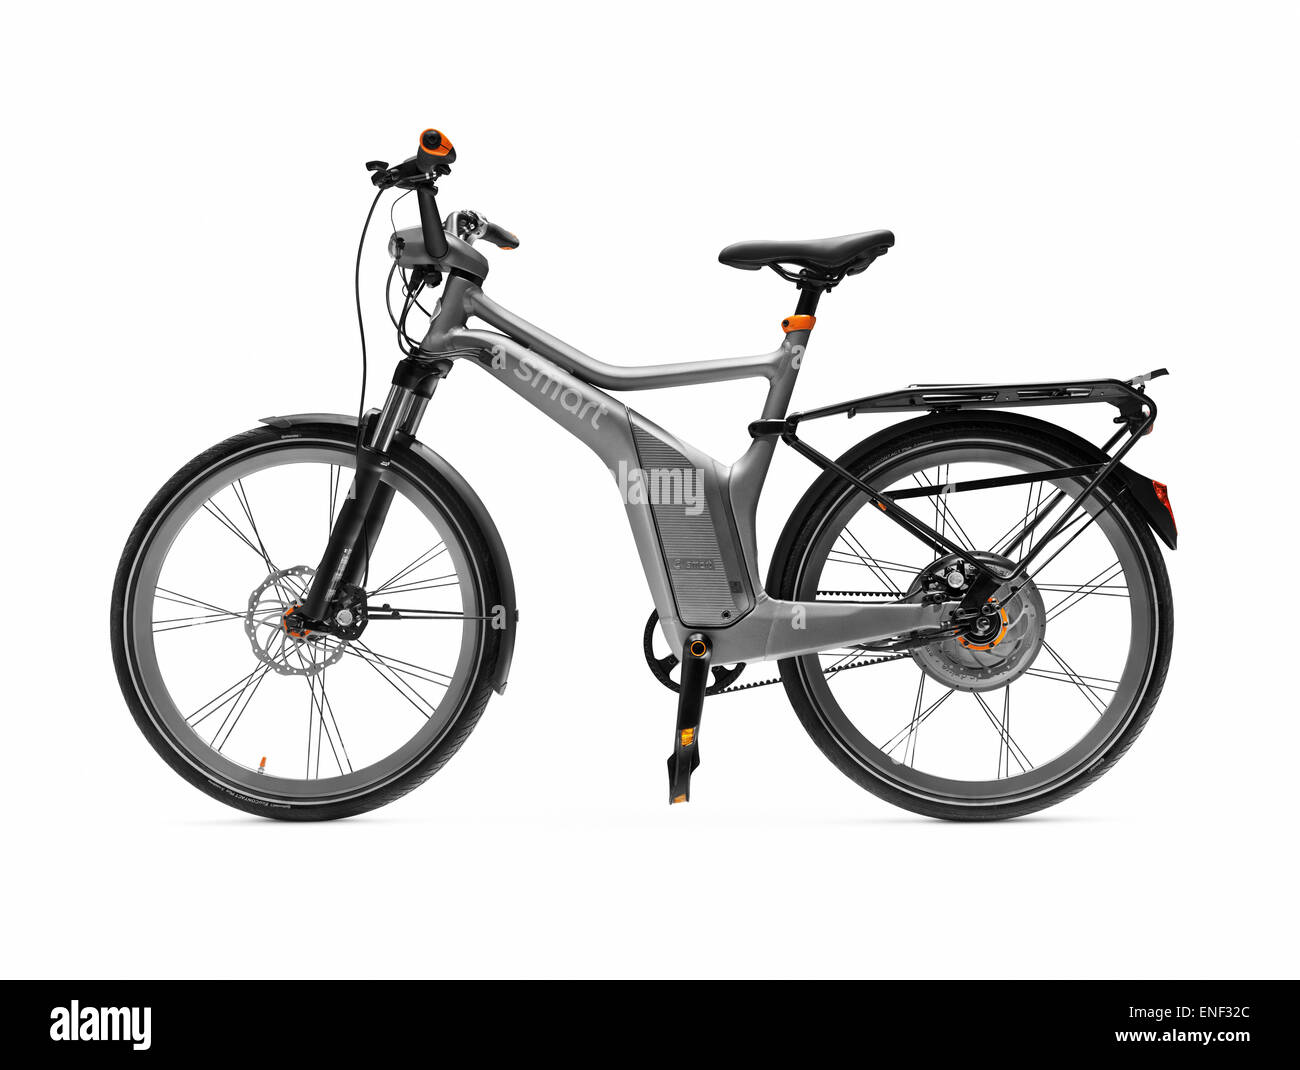 Electric Bike Immagini e Fotos Stock - Alamy